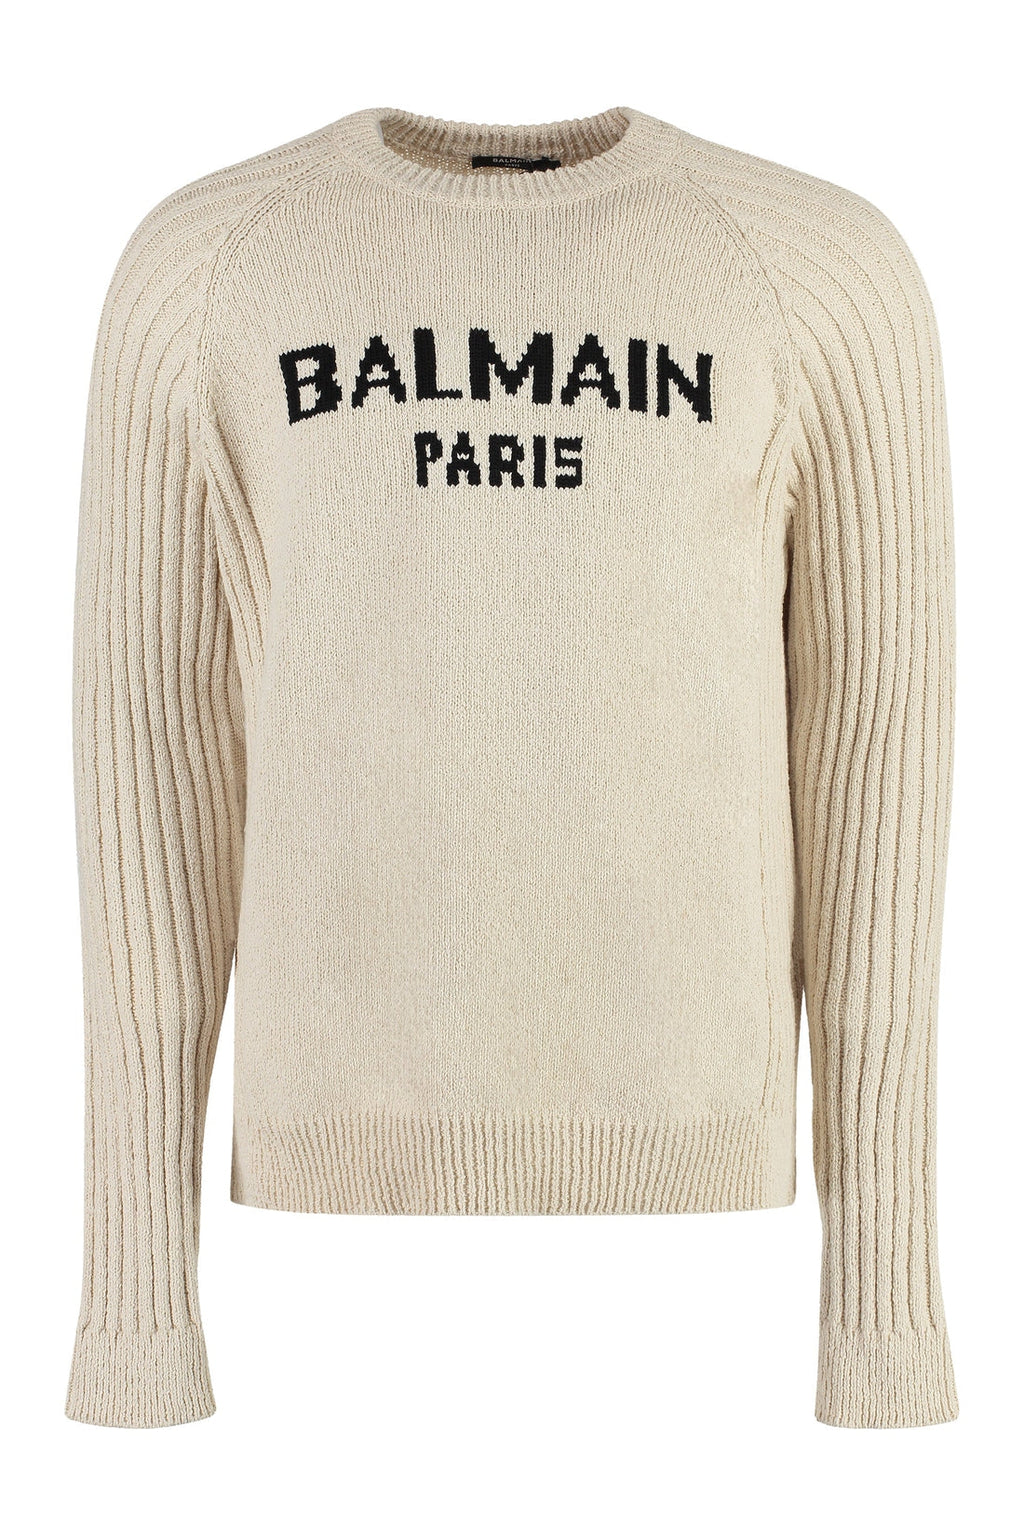 Balmain-OUTLET-SALE-Long sleeve crew-neck sweater-ARCHIVIST